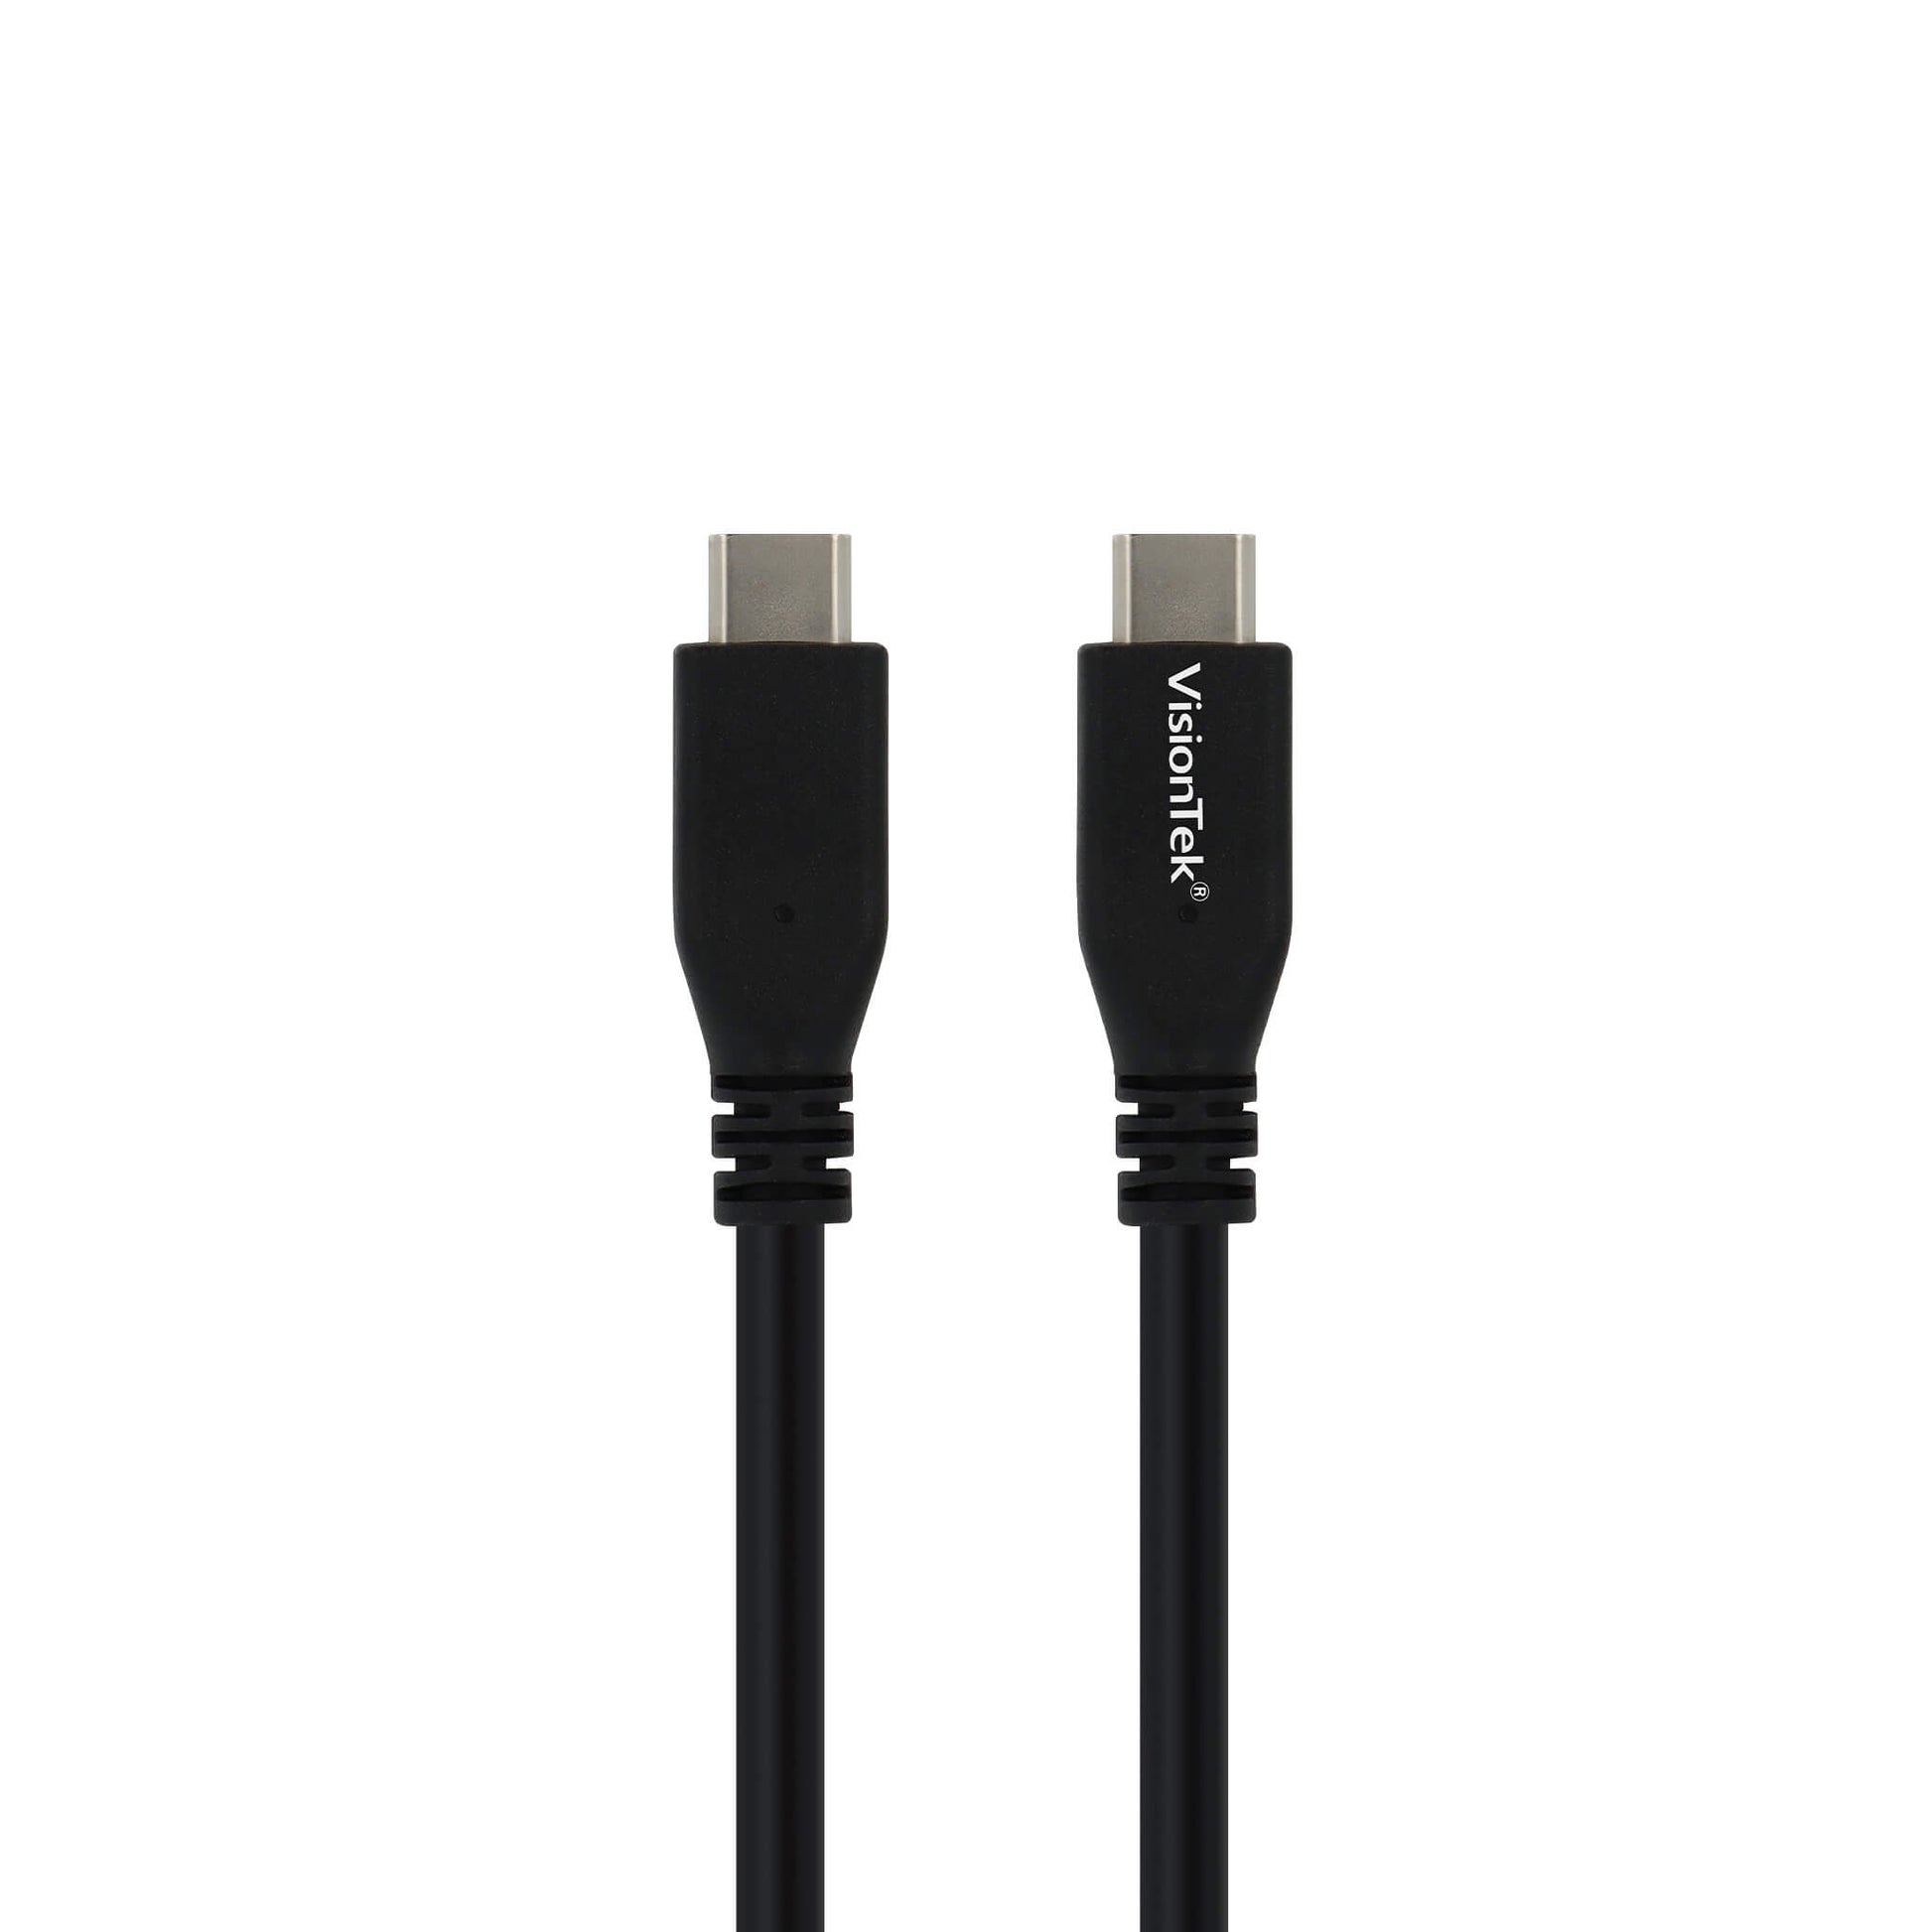 Compre Cable USB C 3m a USB C USB 3.1 Gen2 10Gbps Multifunción